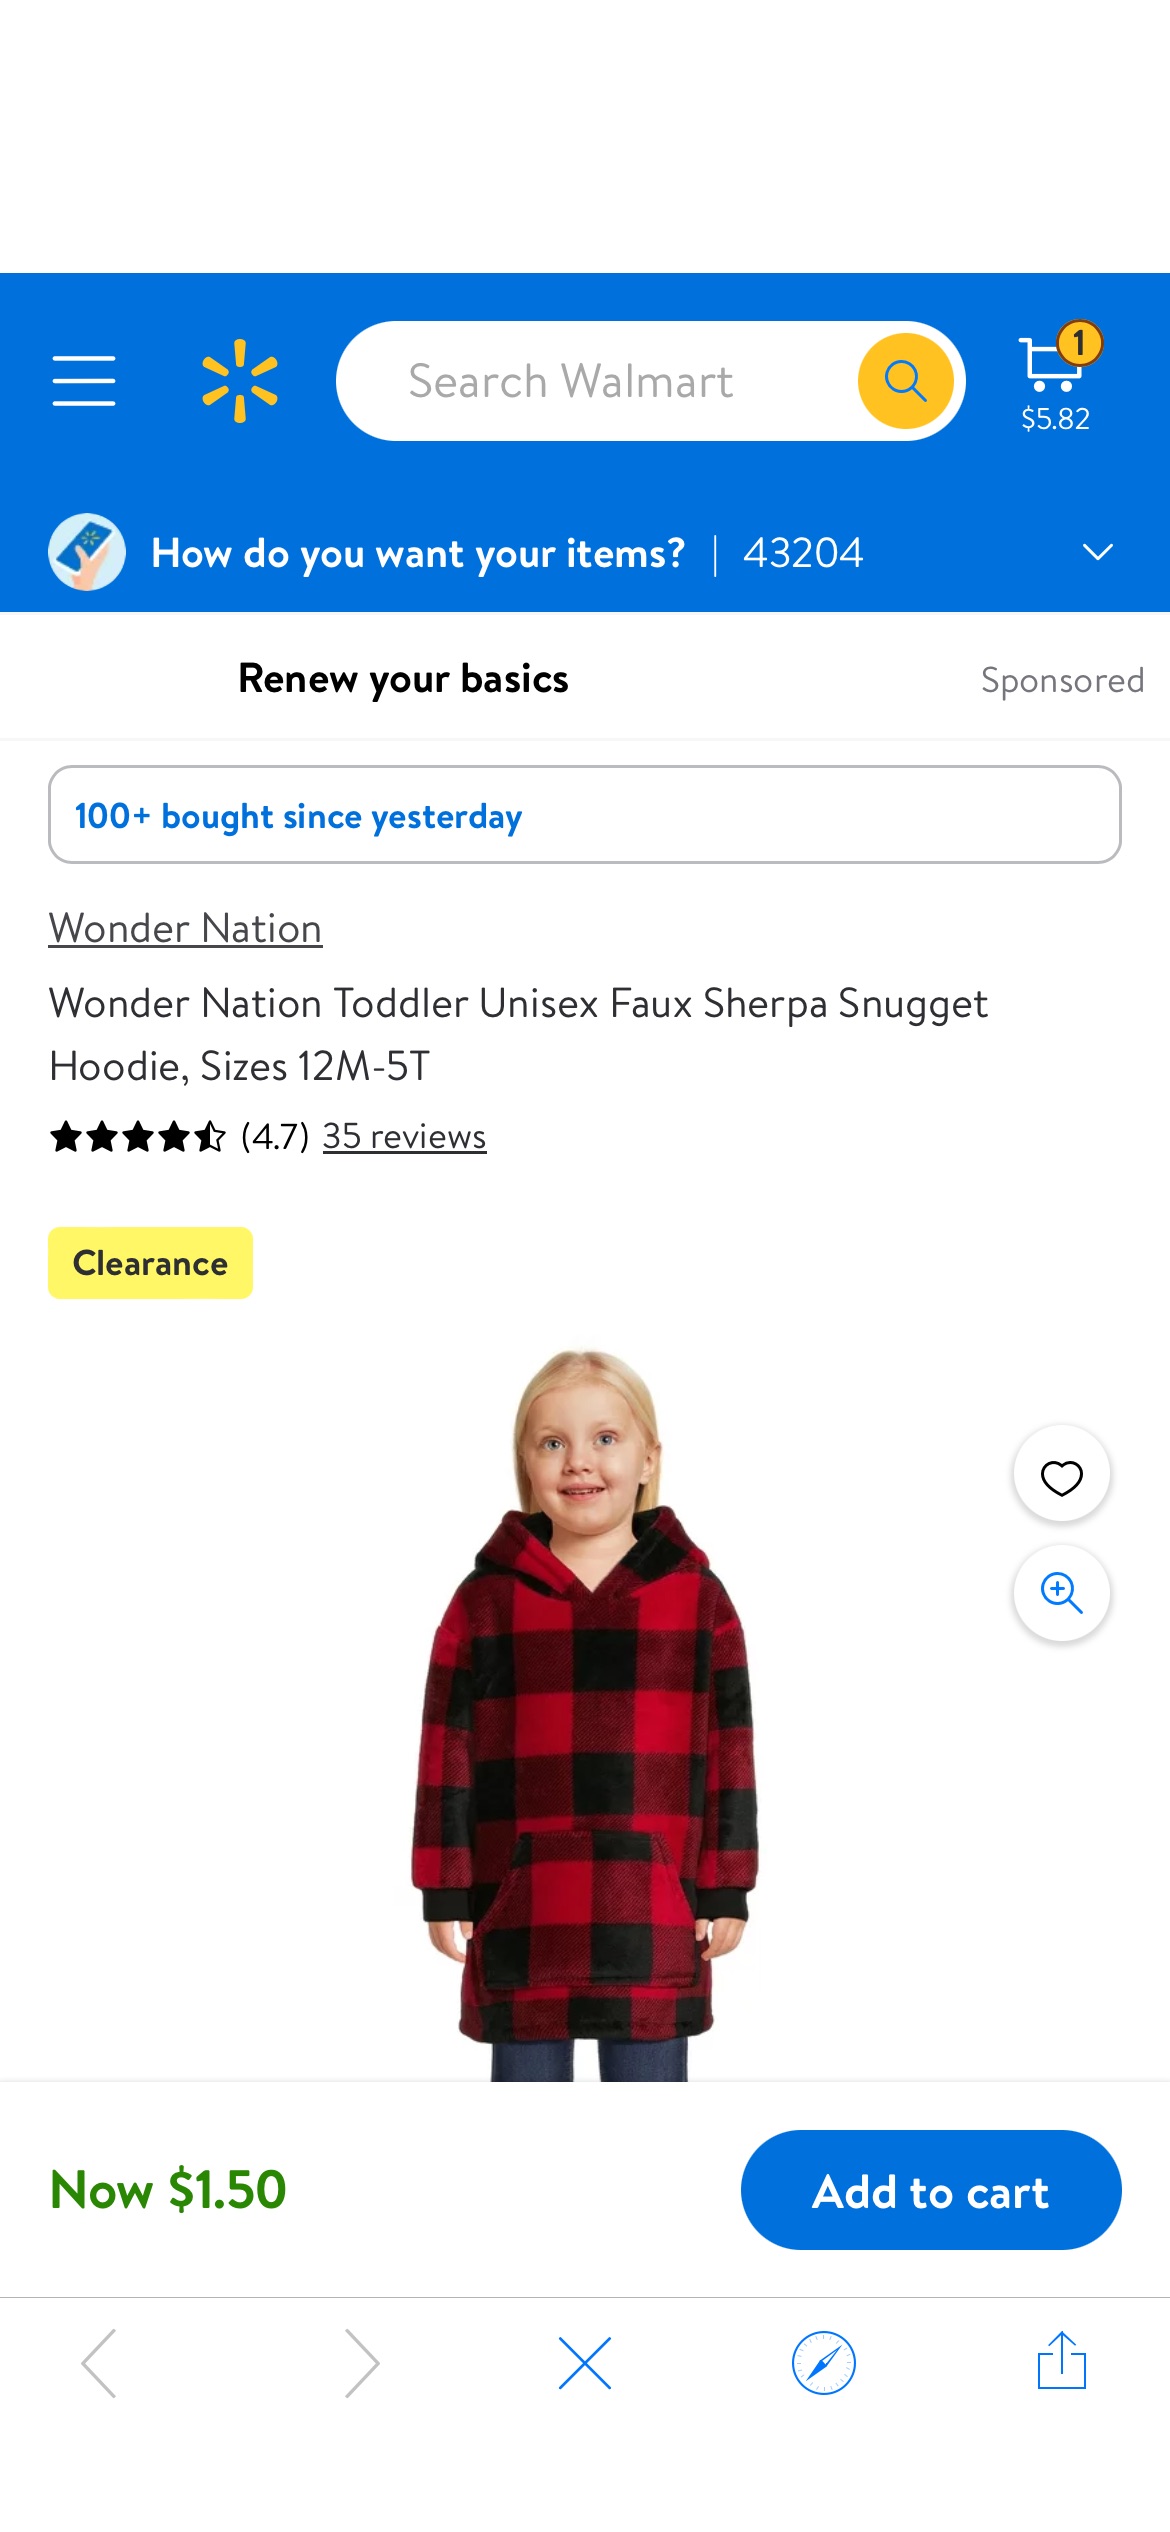 Wonder Nation Toddler Unisex Faux Sherpa Snugget Hoodie, Sizes 12M-5T - Walmart.com 家居服